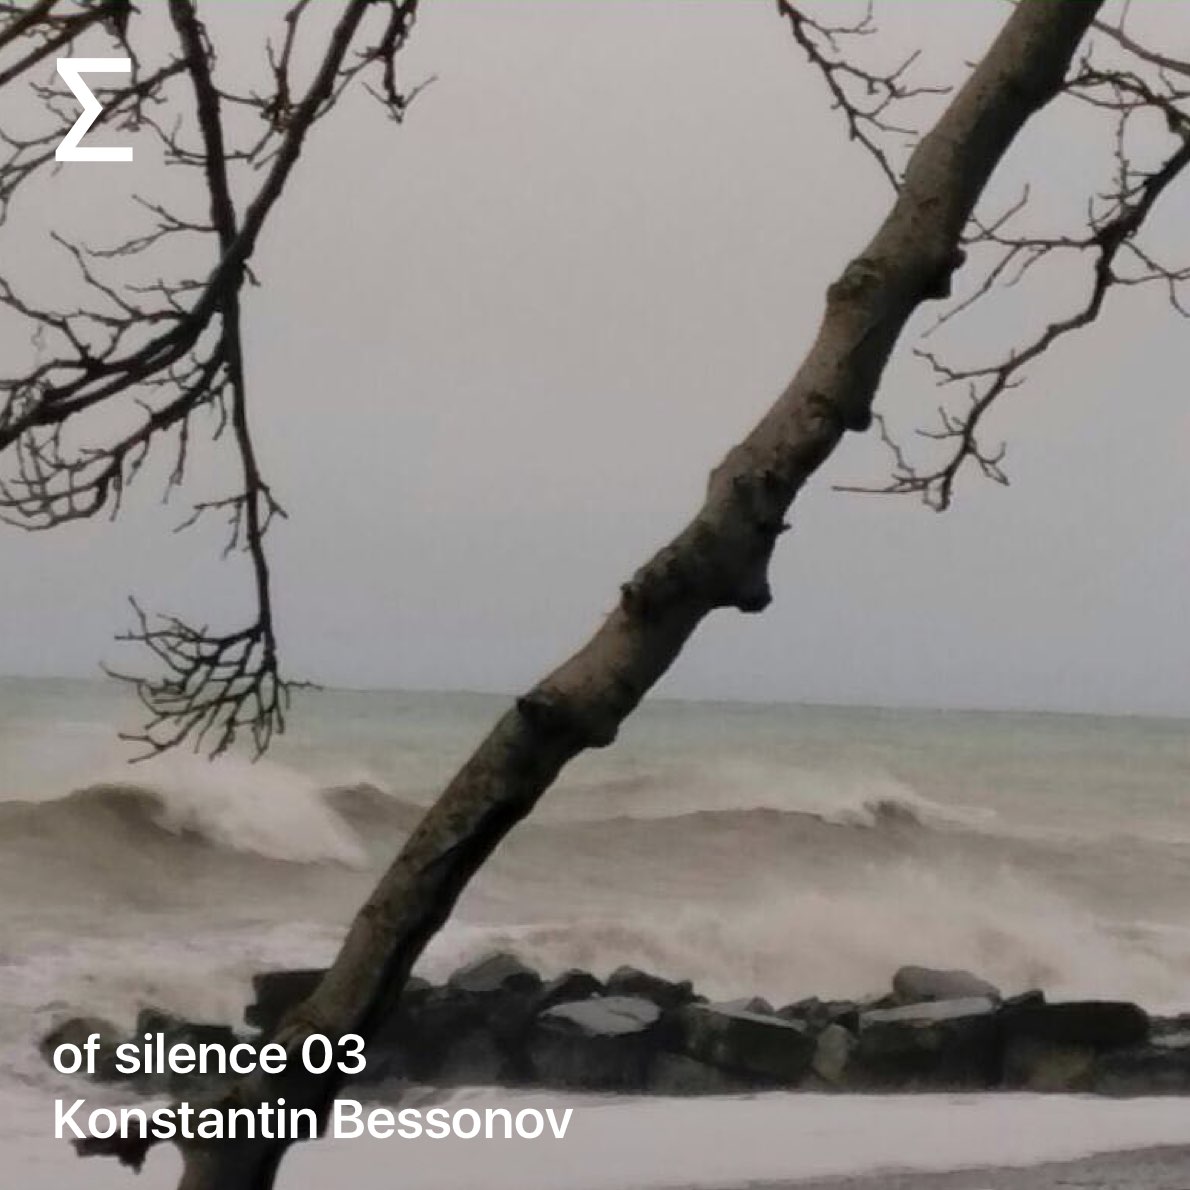 of silence 03 – Konstantin Bessonov